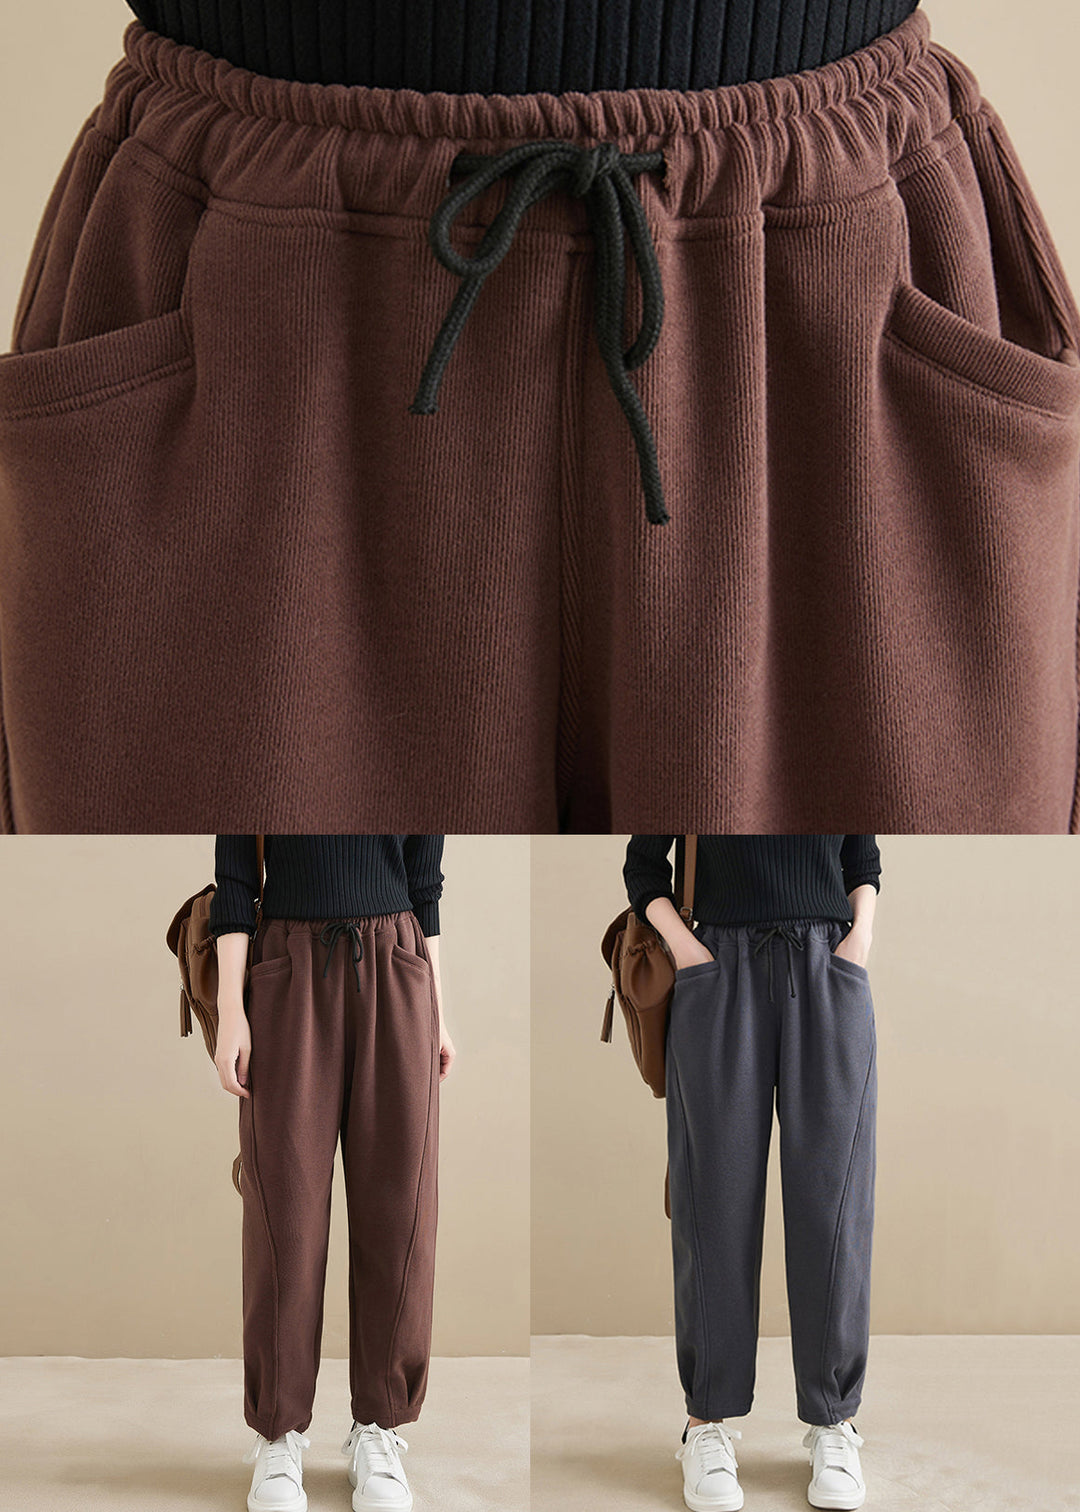 Plus Size Dark Gray Pockets Elastic Waist Warm Fleece Crop Pants